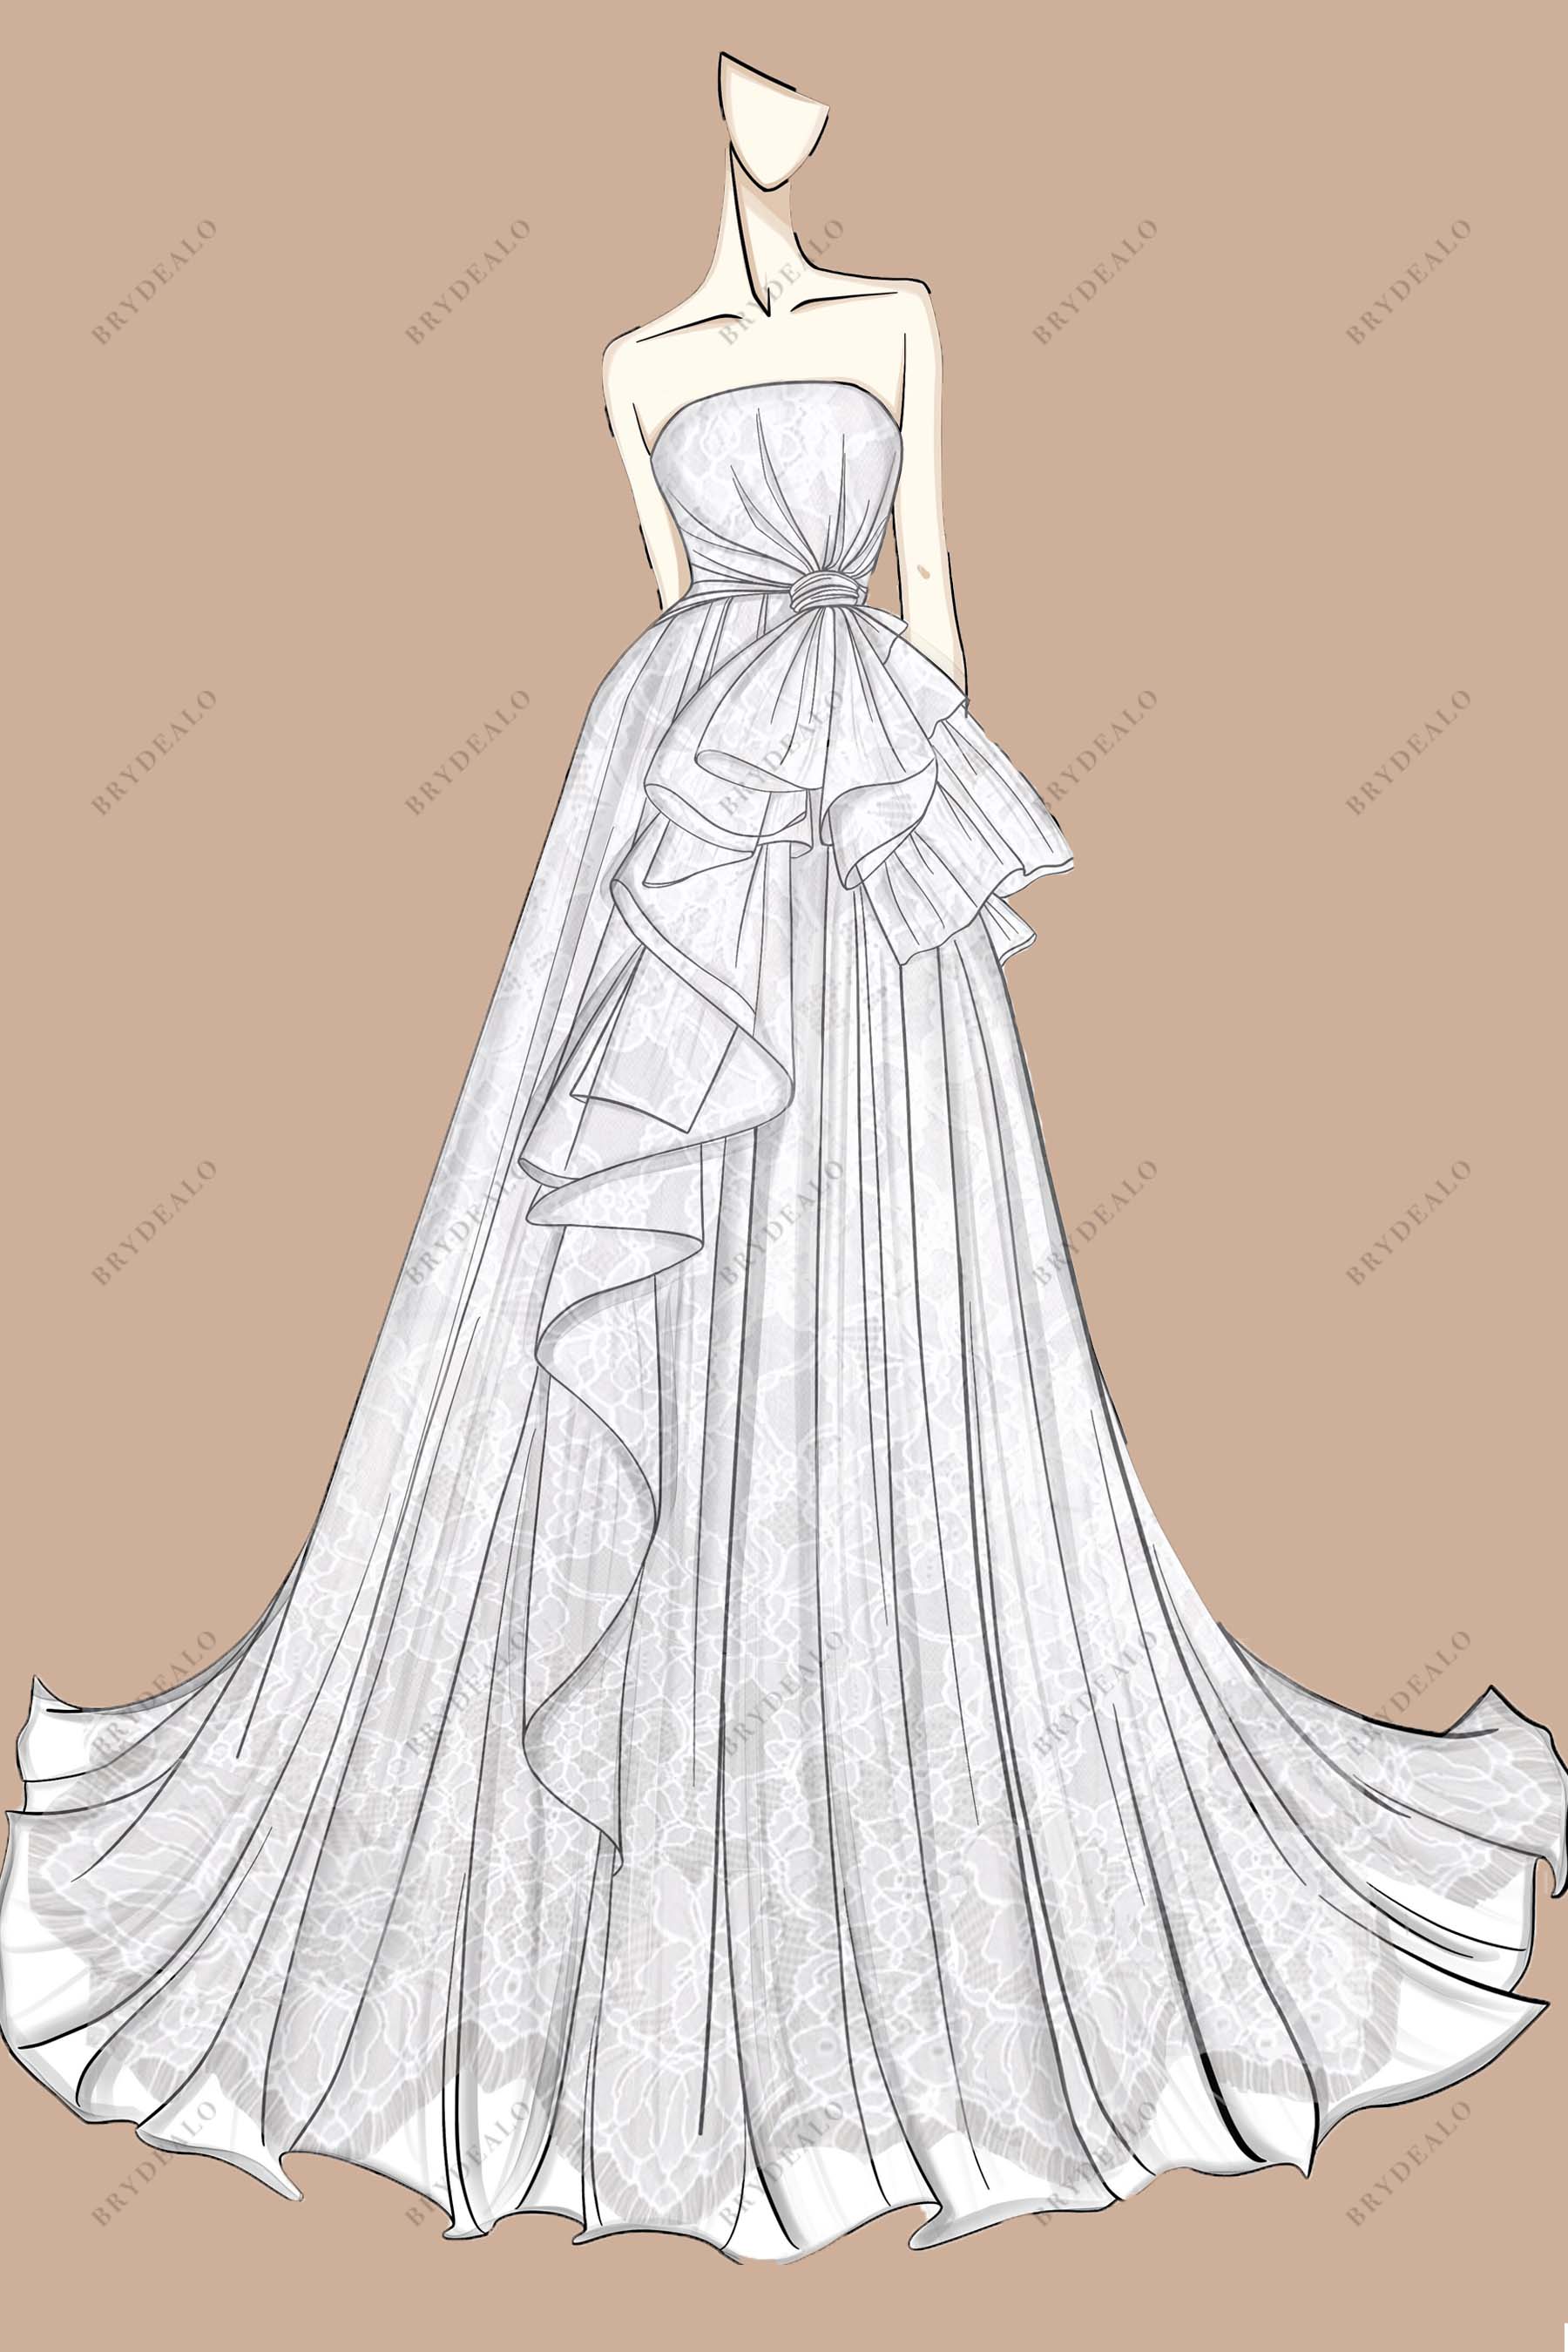 dress designs sketches